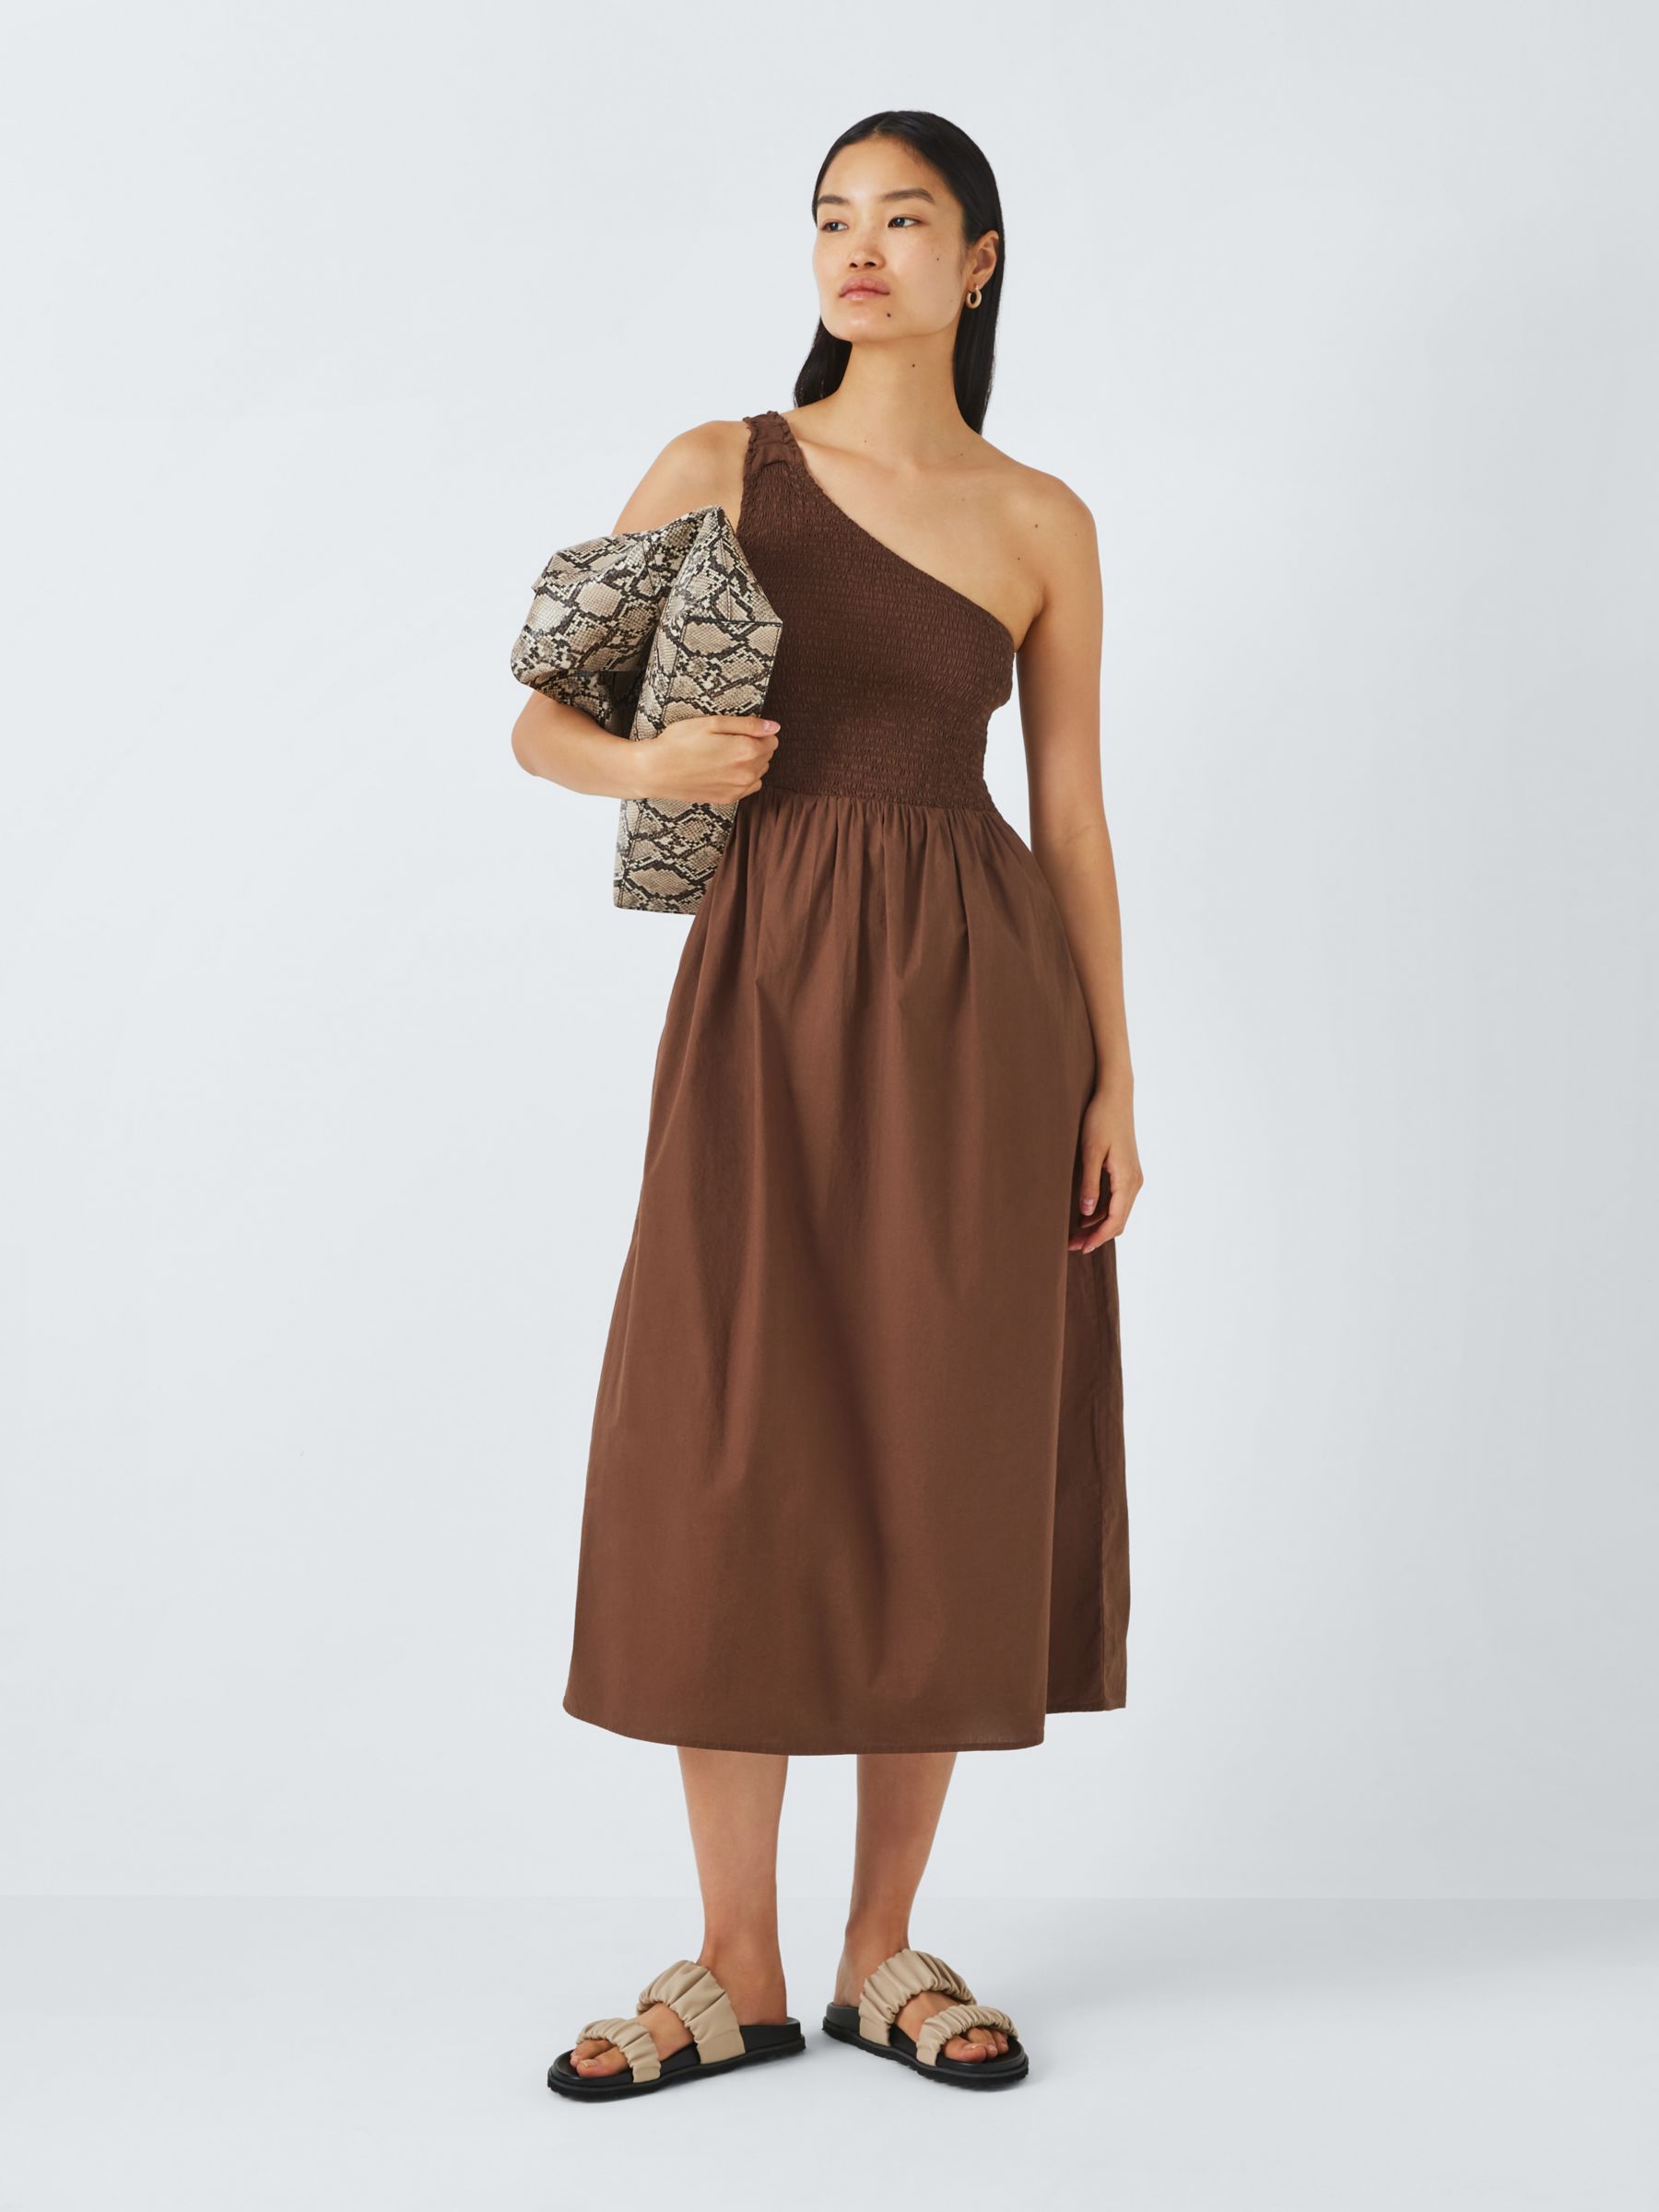 John Lewis ANYDAY Shirred Bodice Asymmetric Dress, Brown, 6